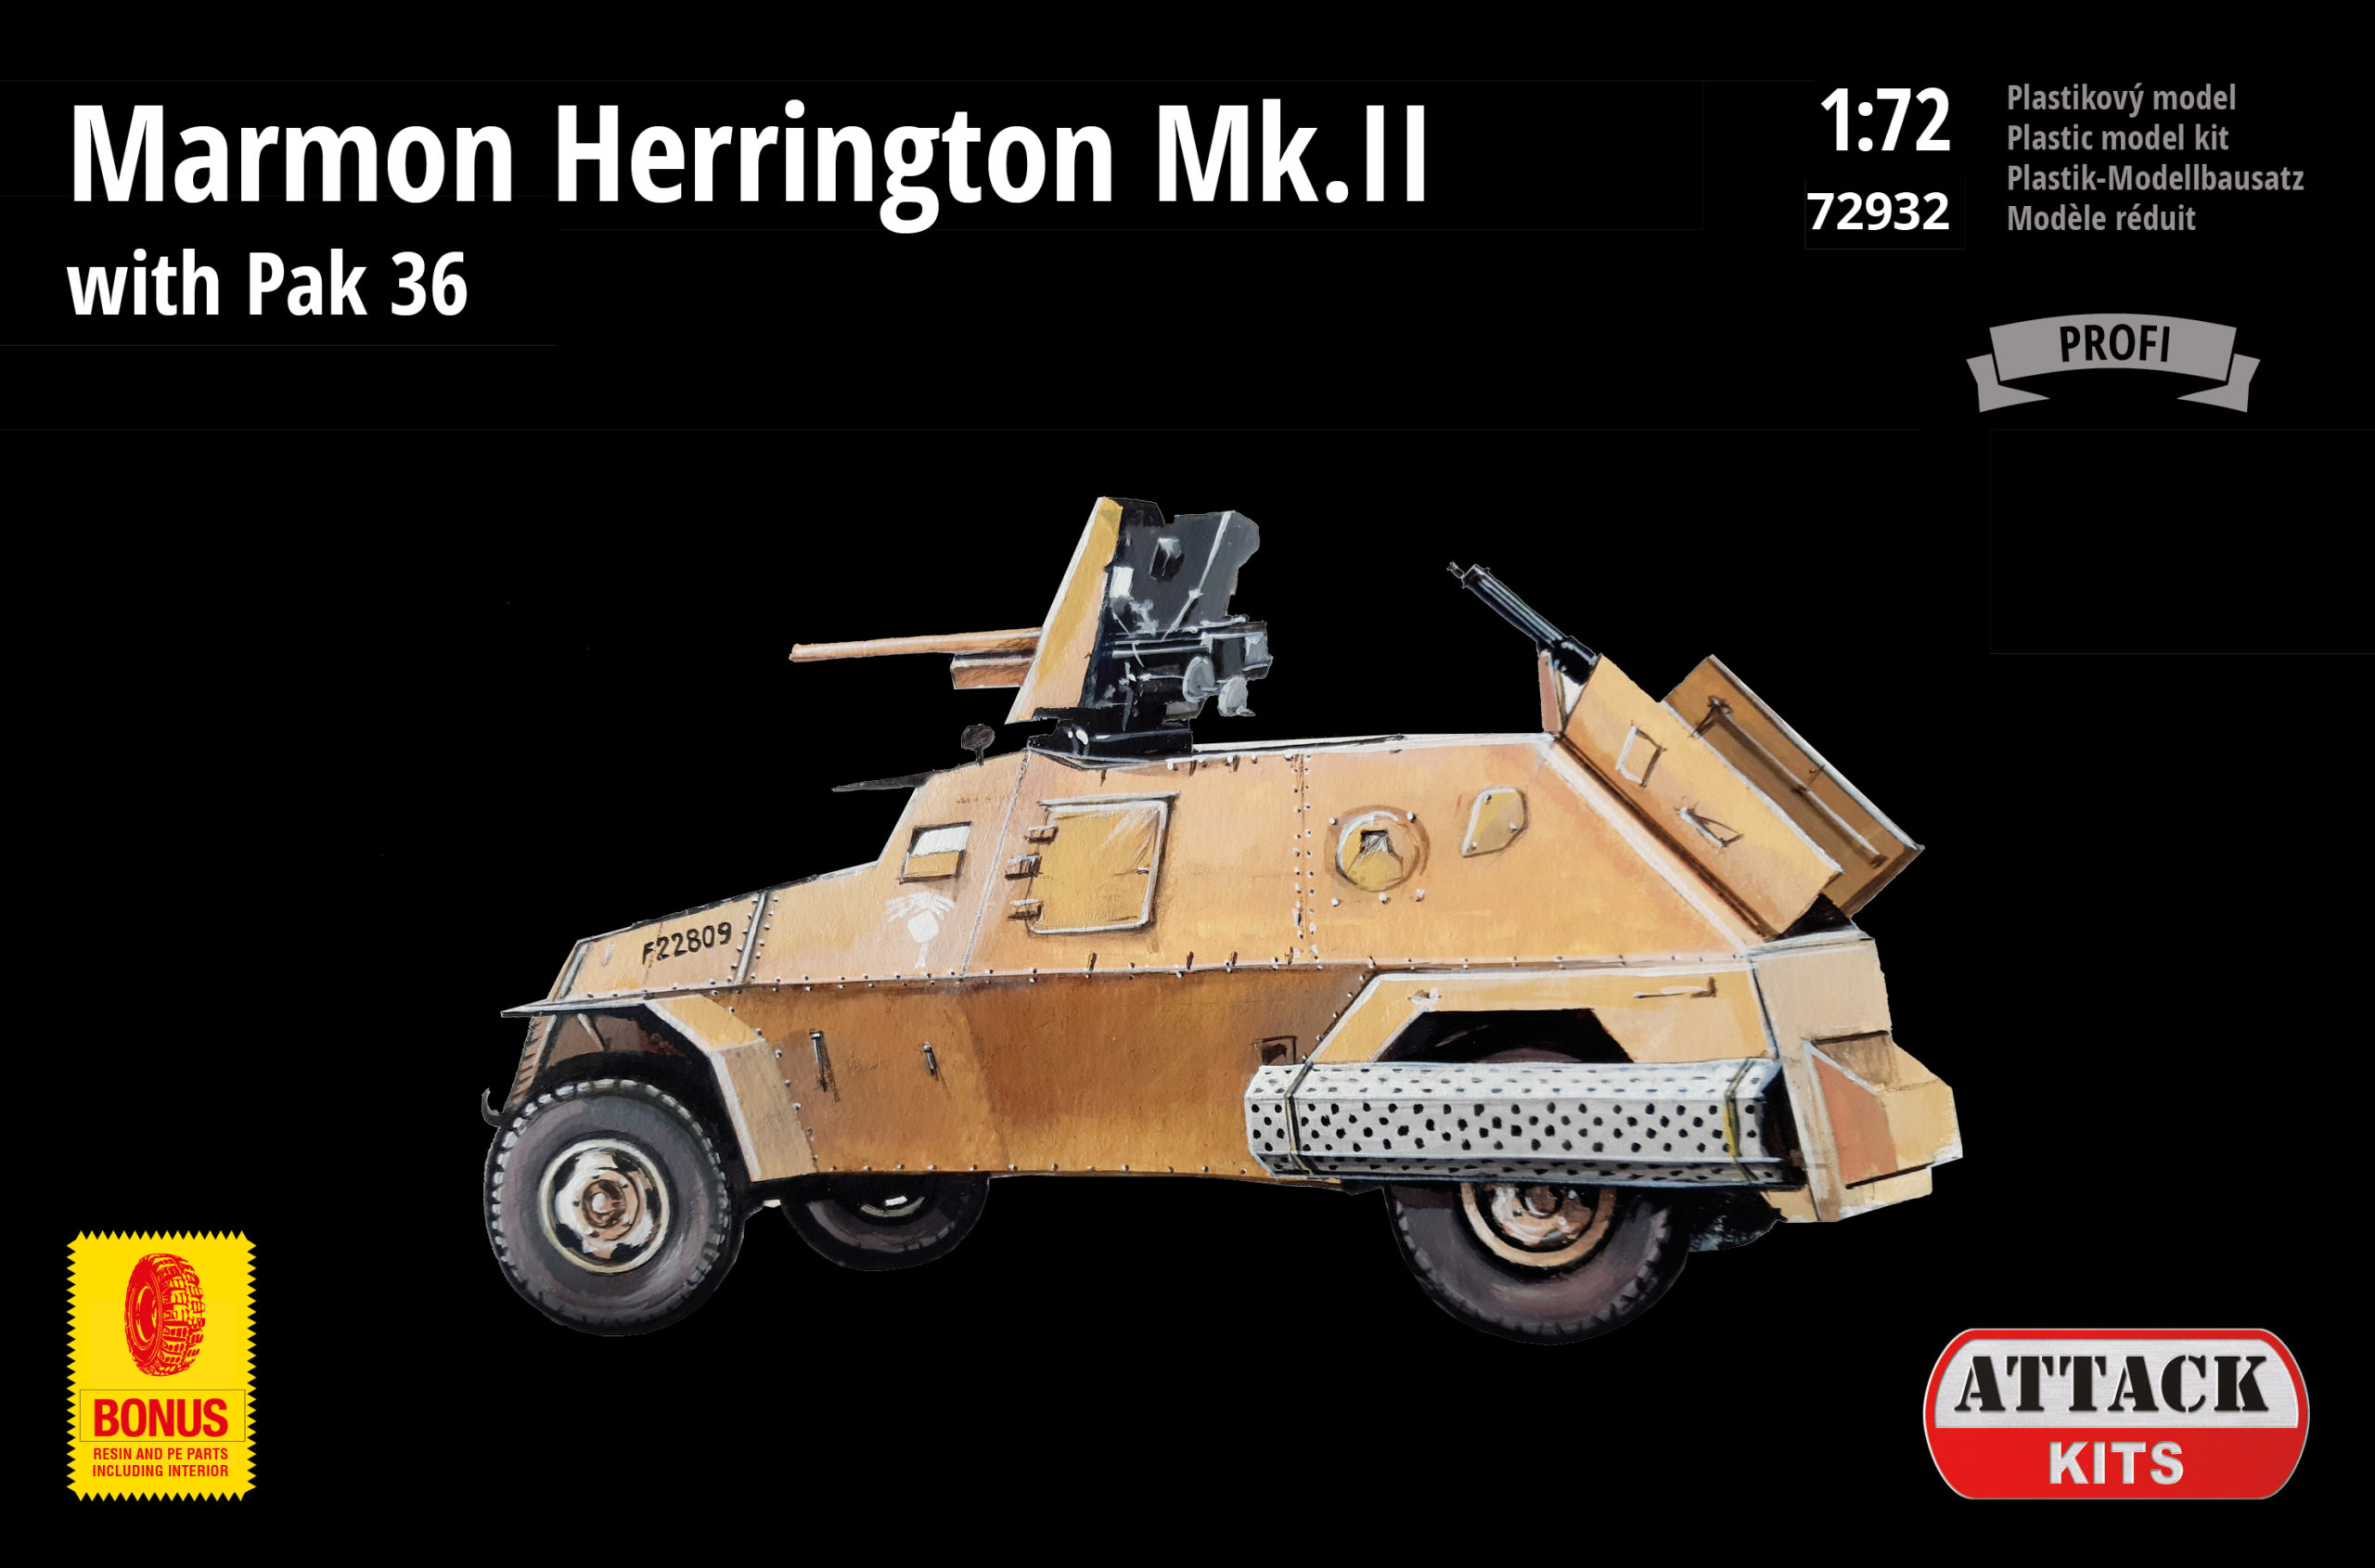 Attack 72932 Marmon Herrington Mk.II with PaK 36 box art